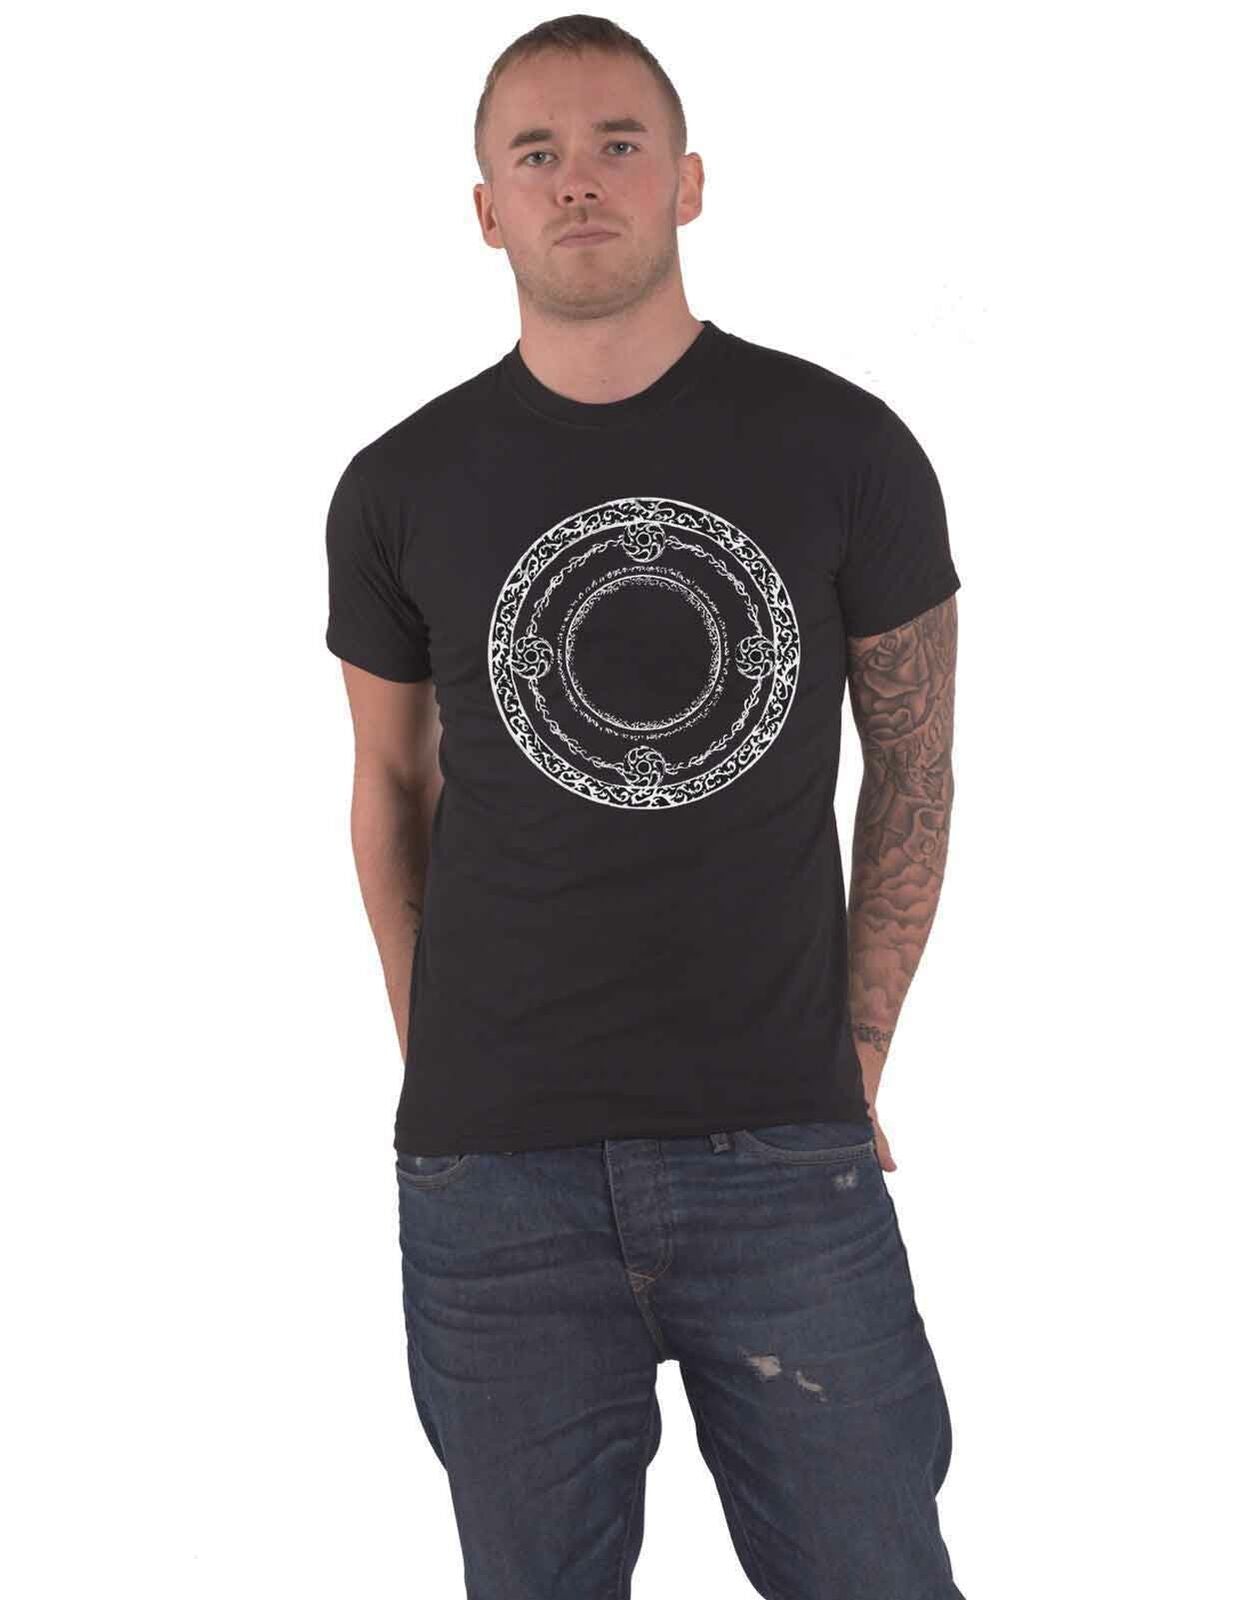 Elden Ring - Men's Short Sleeved T-shirt Neu Top